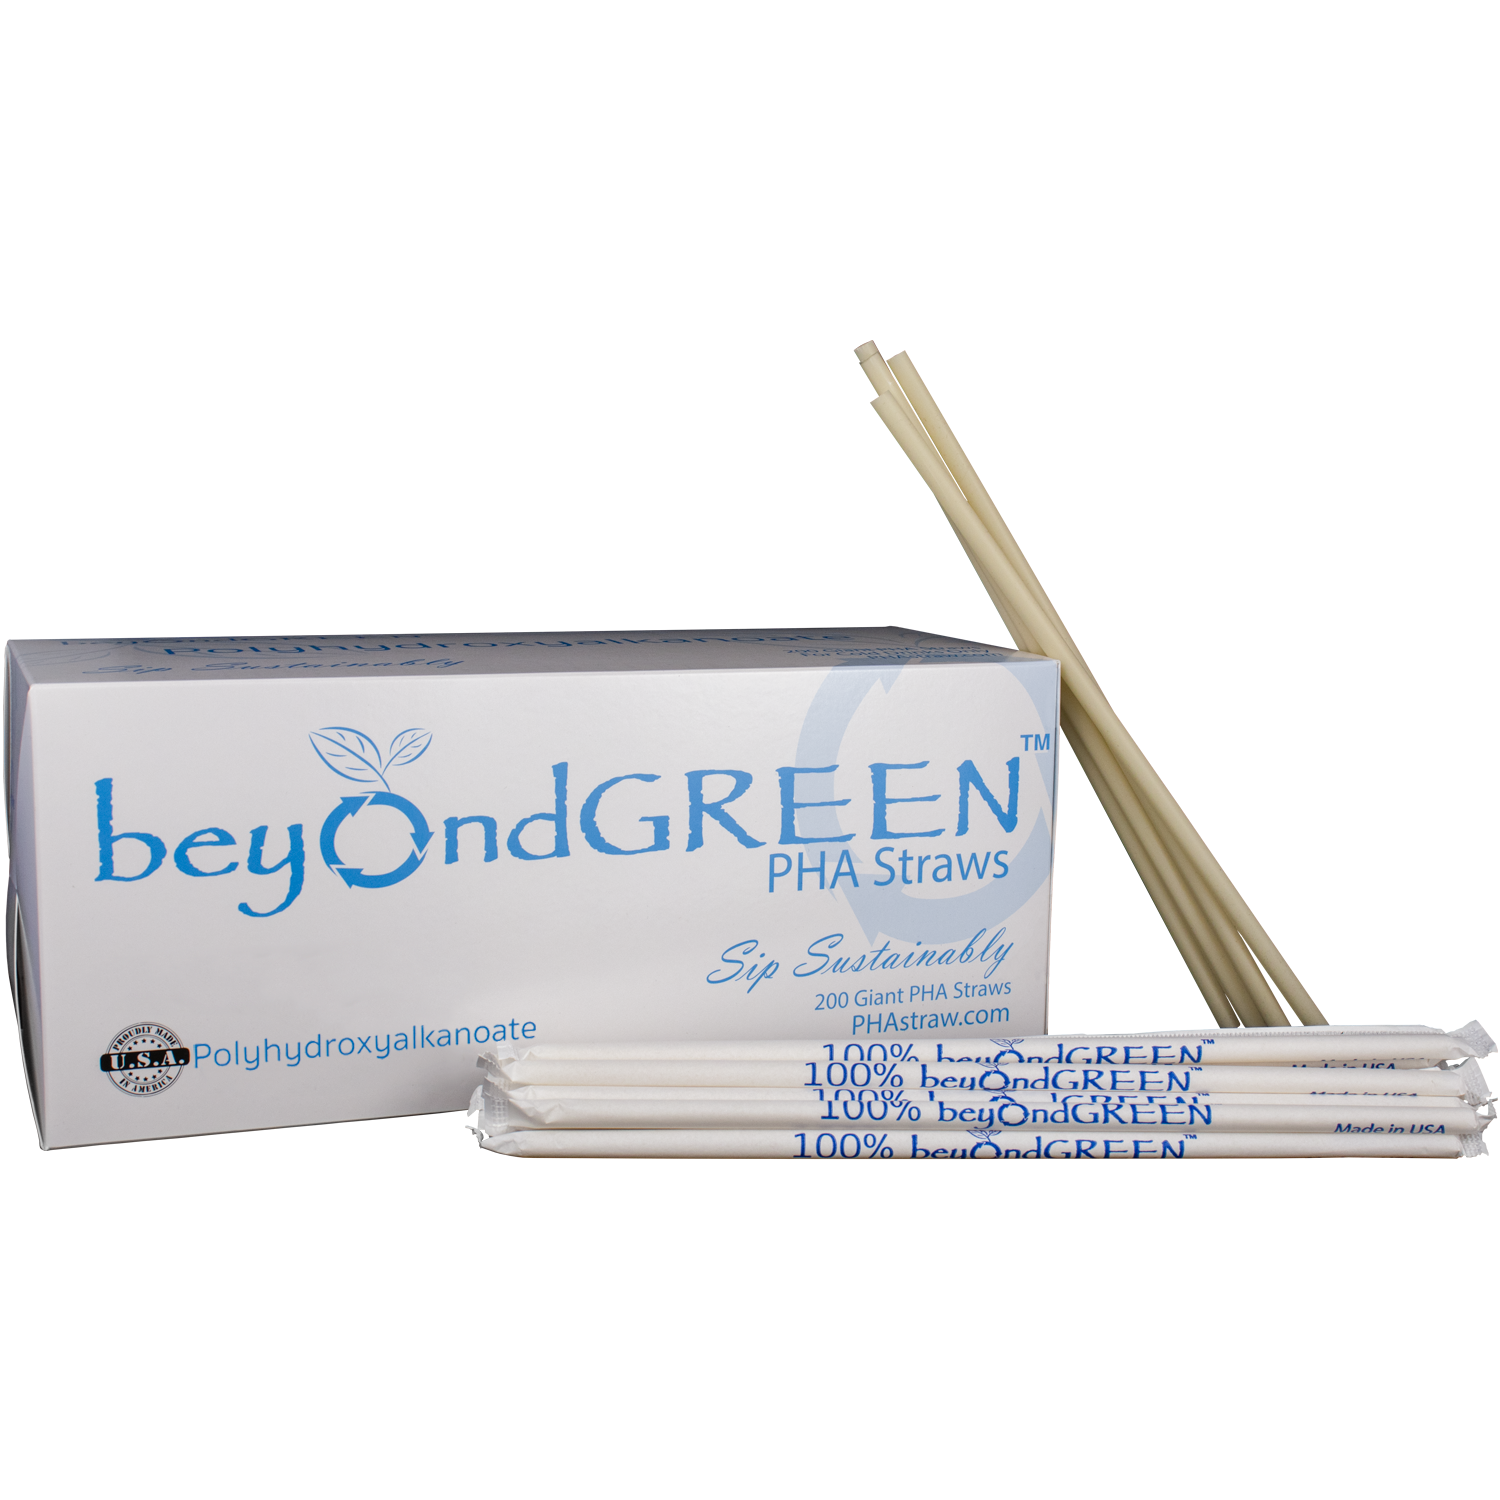 beyondGREEN Plant-Based PHA Disposable Drinking Straws - Individually Wrapped - 200 White Giant Straws – 10.25" x 0.24"